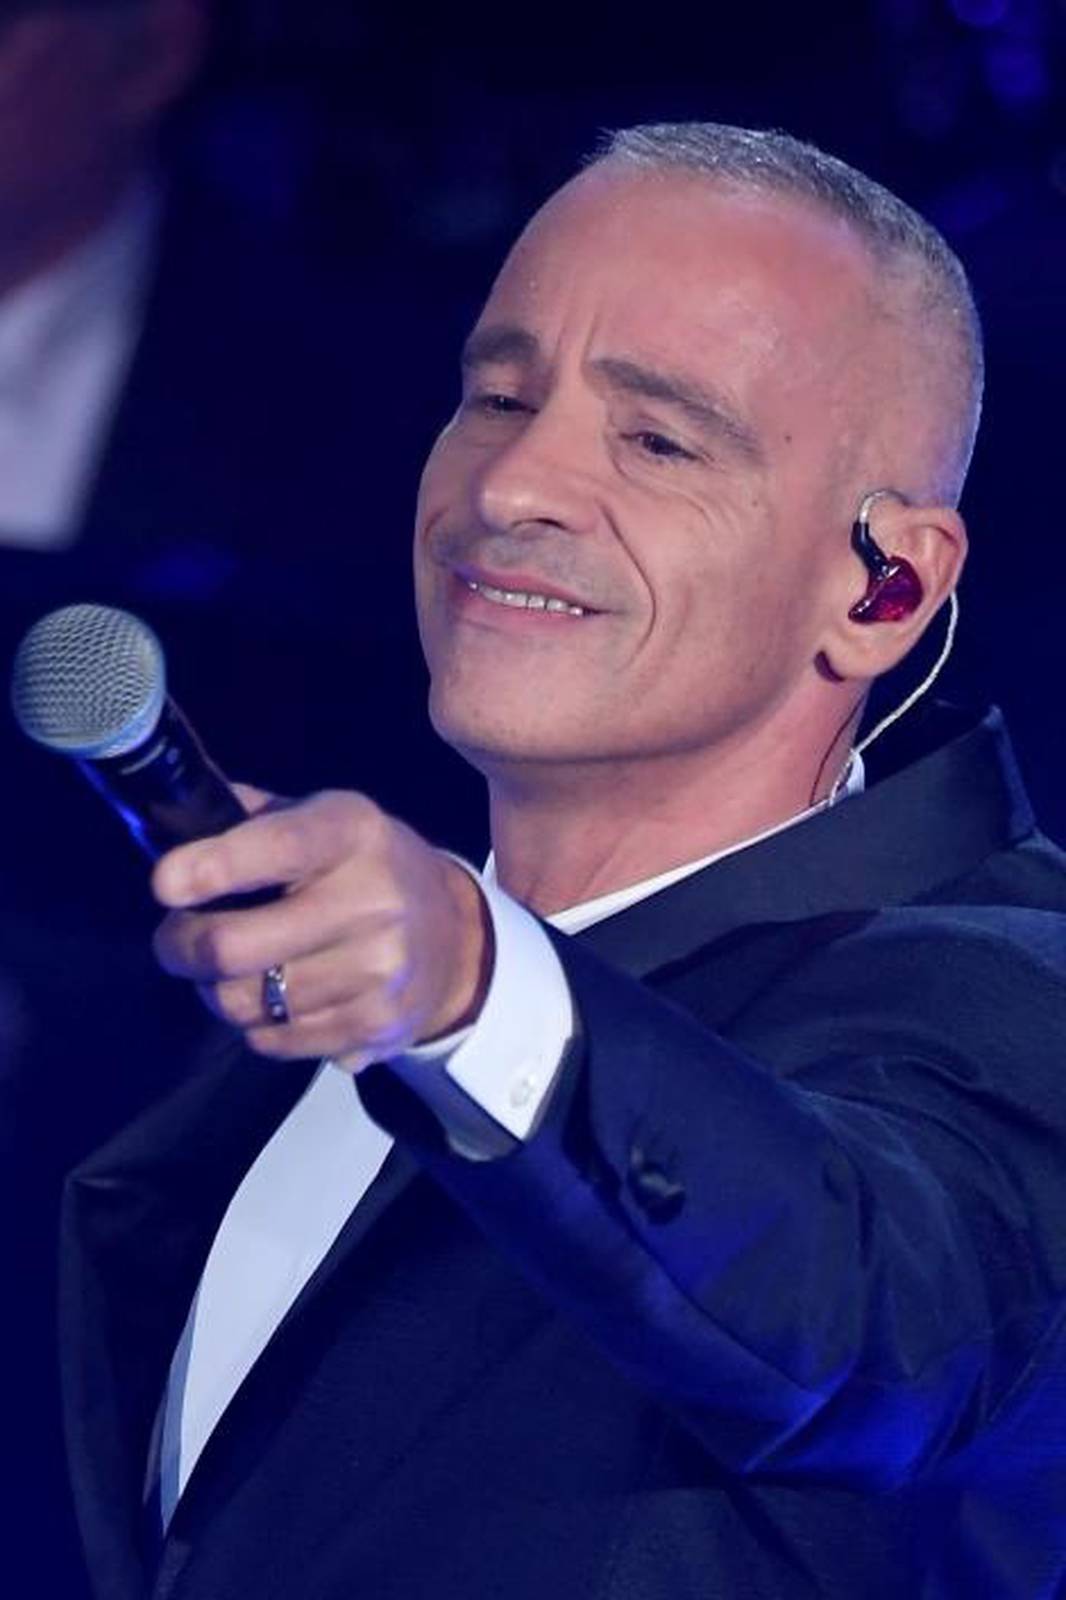 Sanremo, 69th Festival of Italian song 2019. Final evening. Eros Ramazzotti